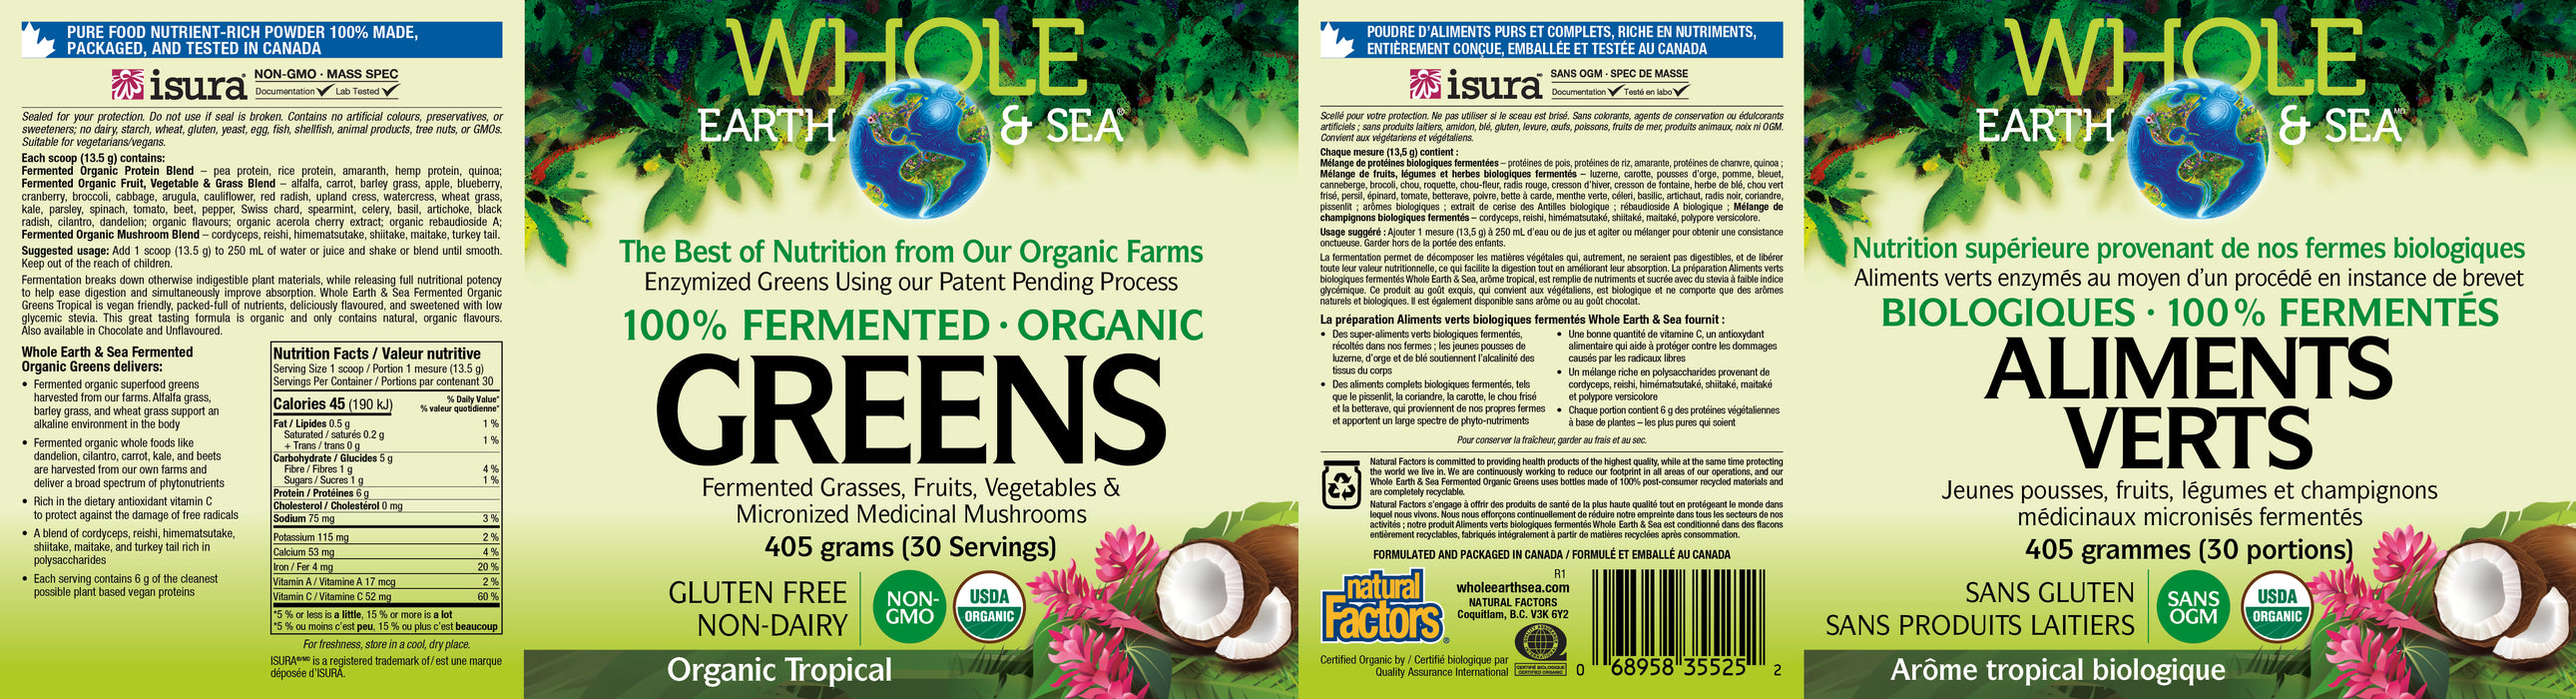 Whole Earth & Sea 100% Fermented Organic Greens - Tropical 405g